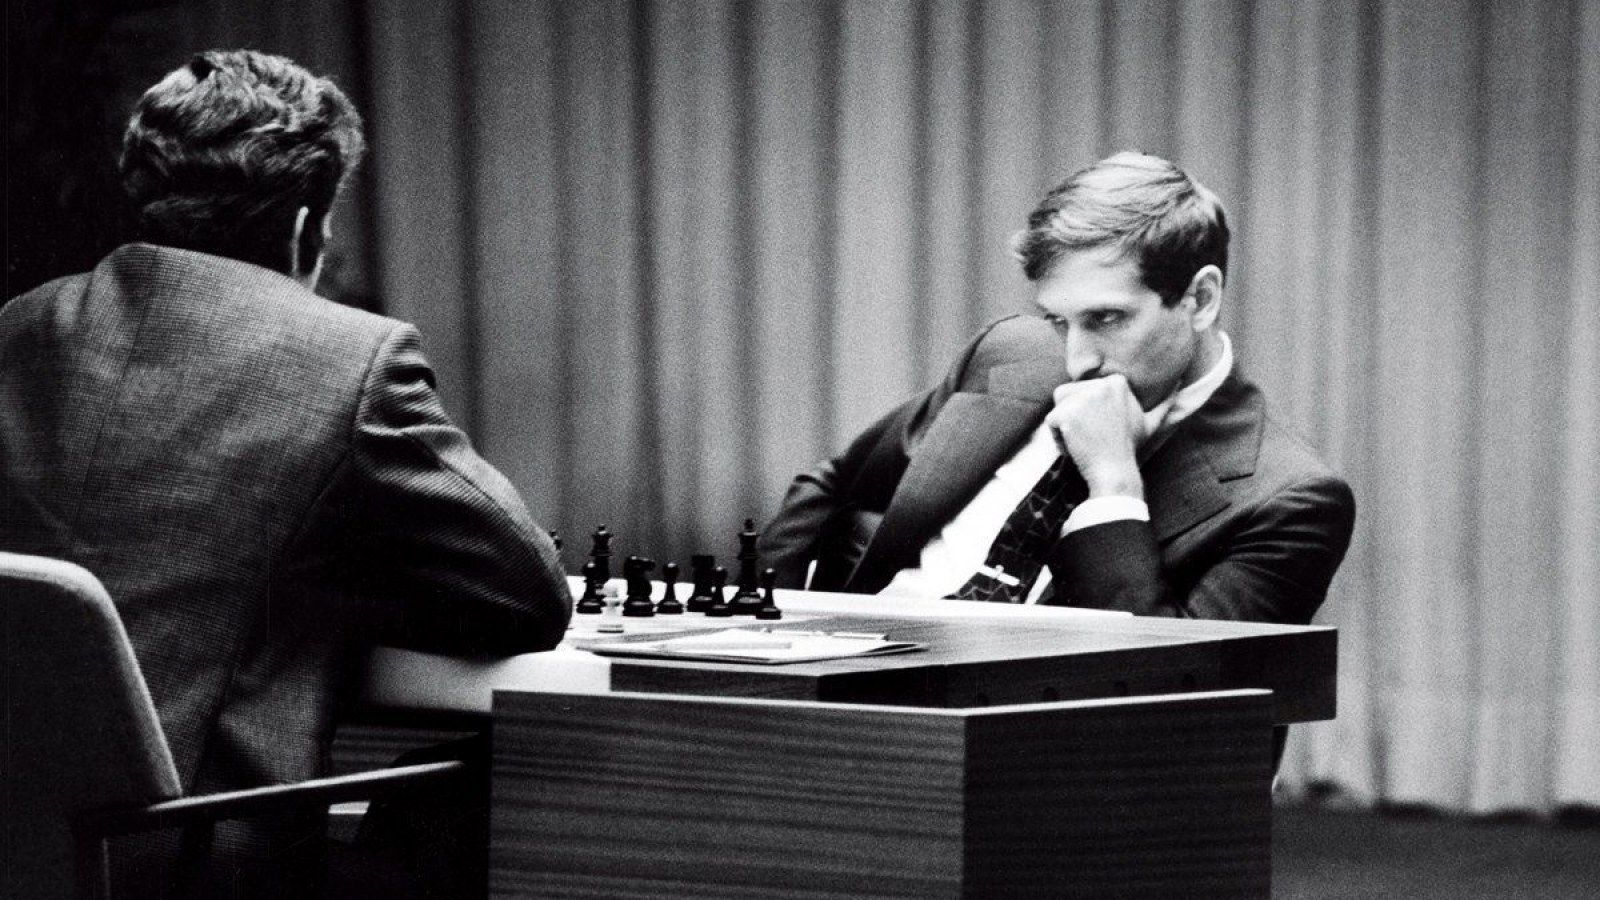 Bobby Fischer (1972, Reykjavik, playing against world champion Boris Spassky)